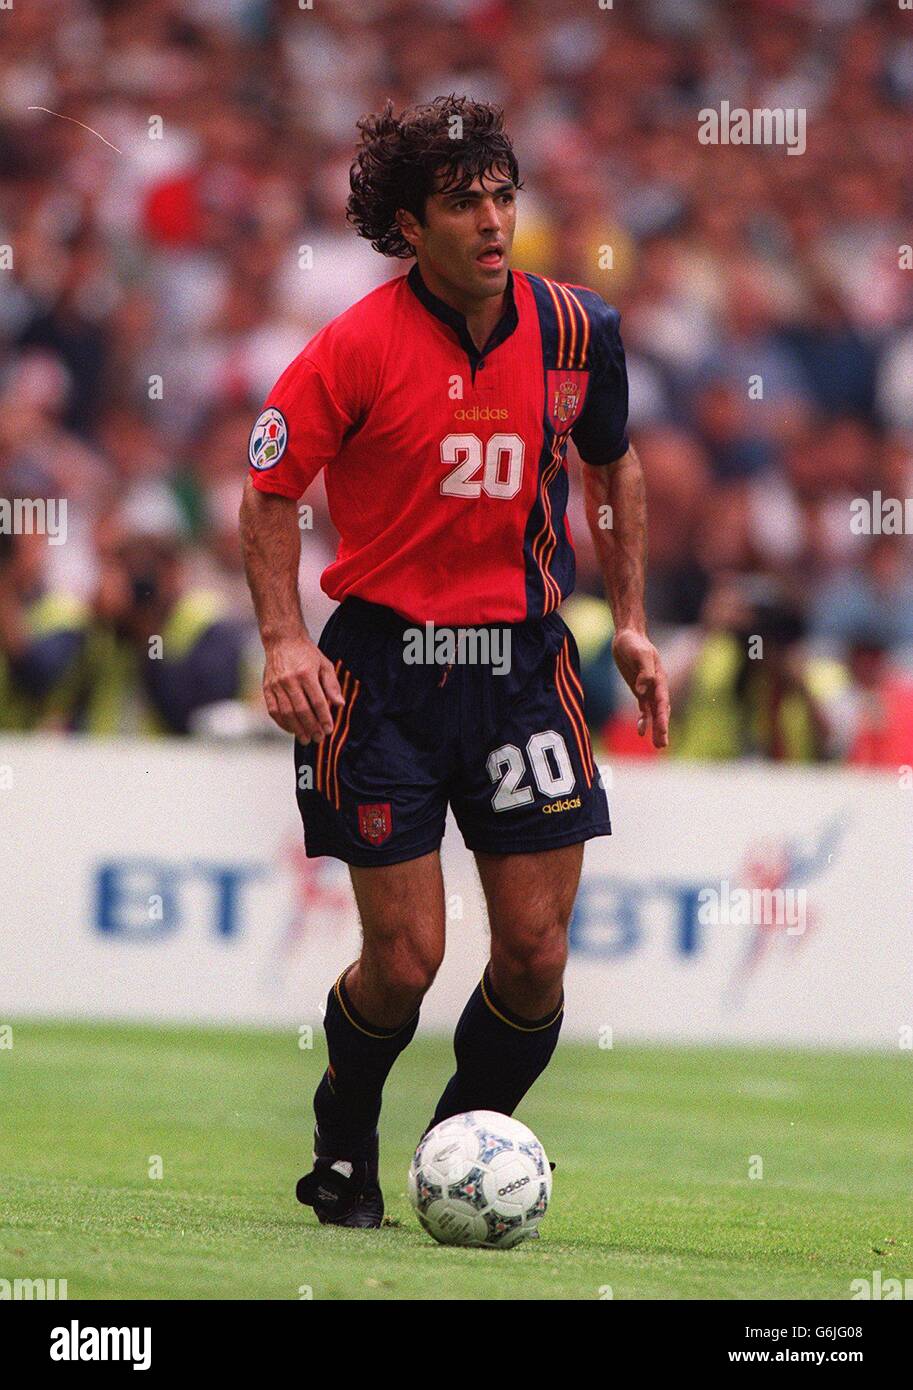 Fußball, Euro 96. England / Spanien, Wembley. Miguel Angel Nadal, Spanien  Stockfotografie - Alamy